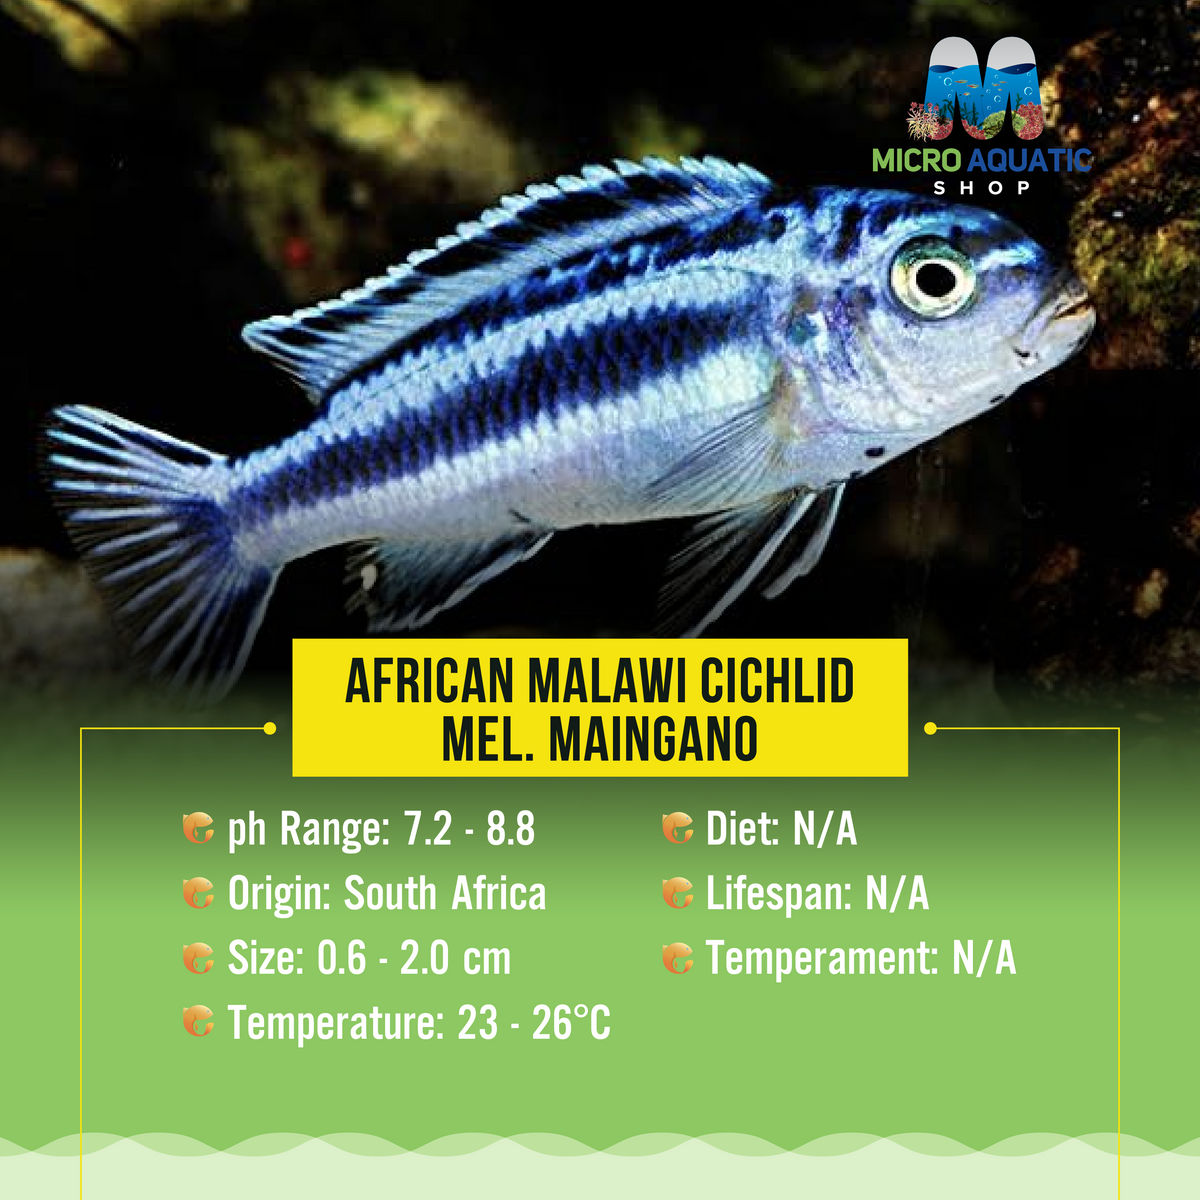 African Malawi Cichlid – Mel. maingano